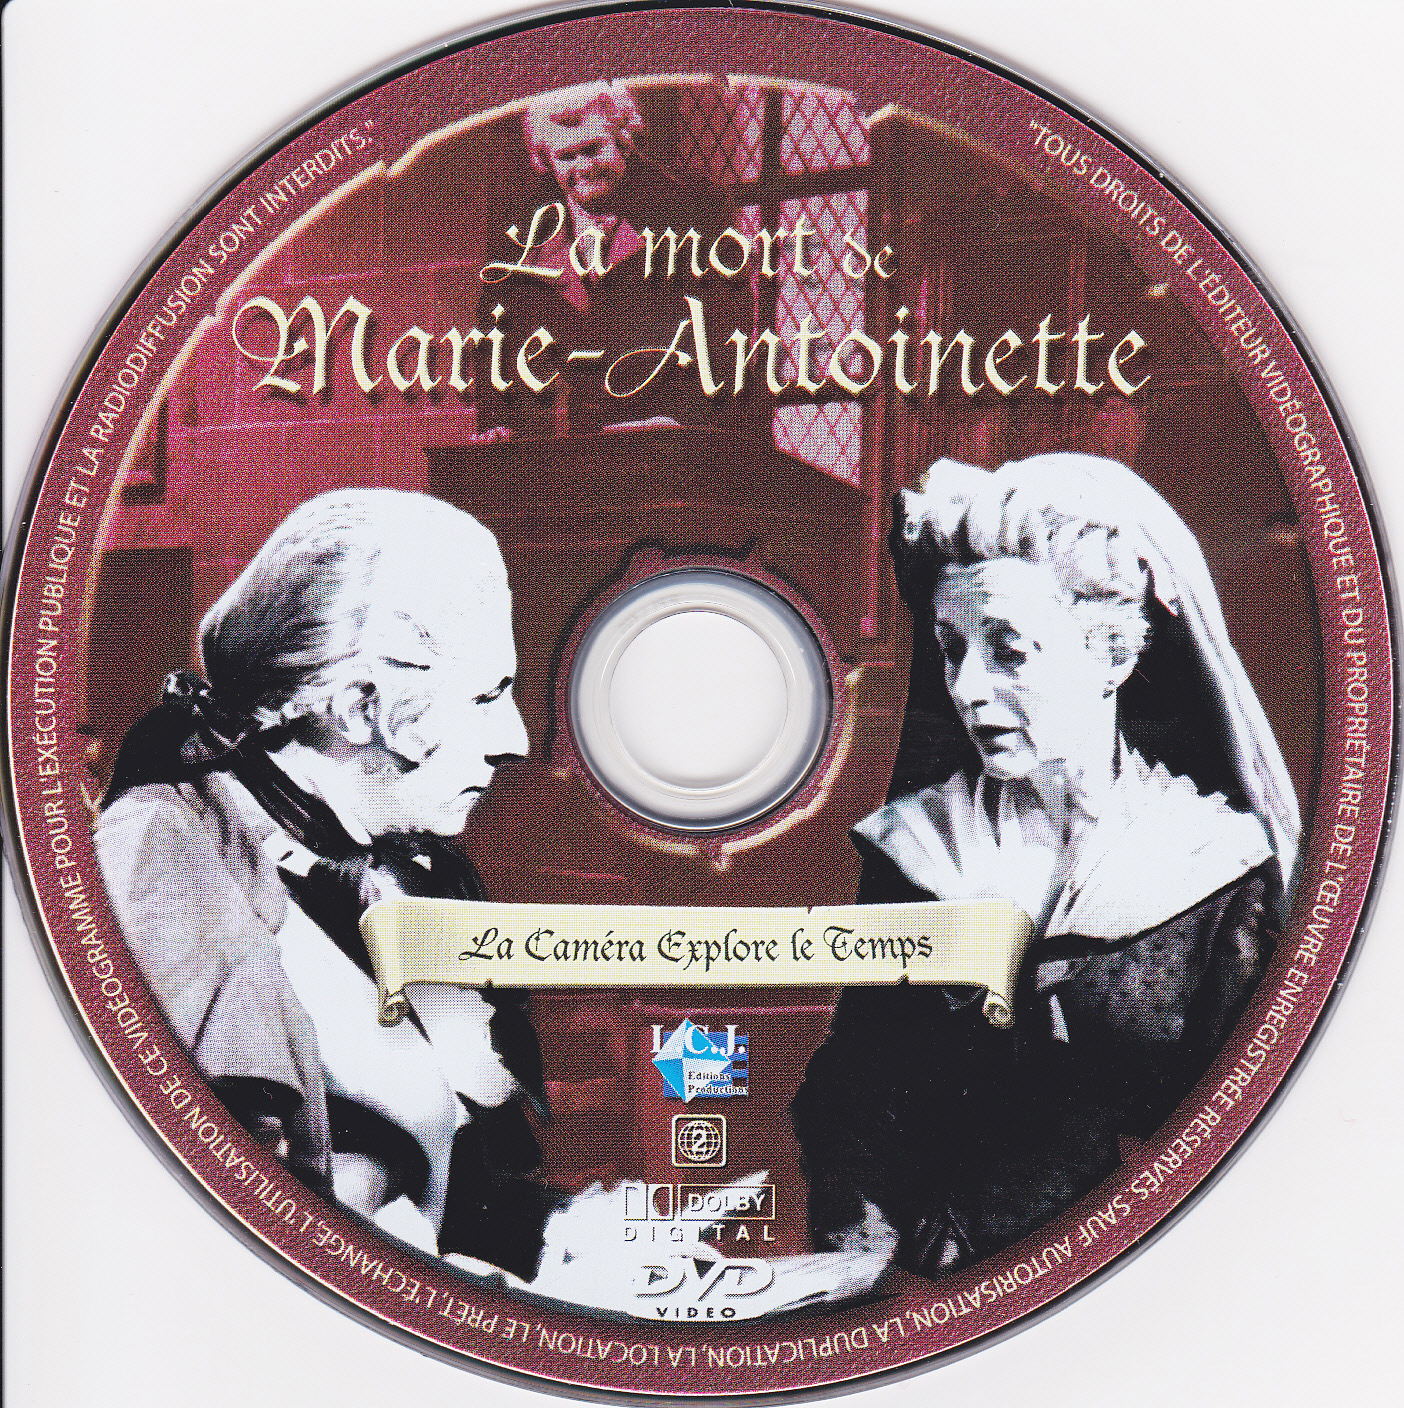 La camera explore le temps - La mort de Marie Antoinette